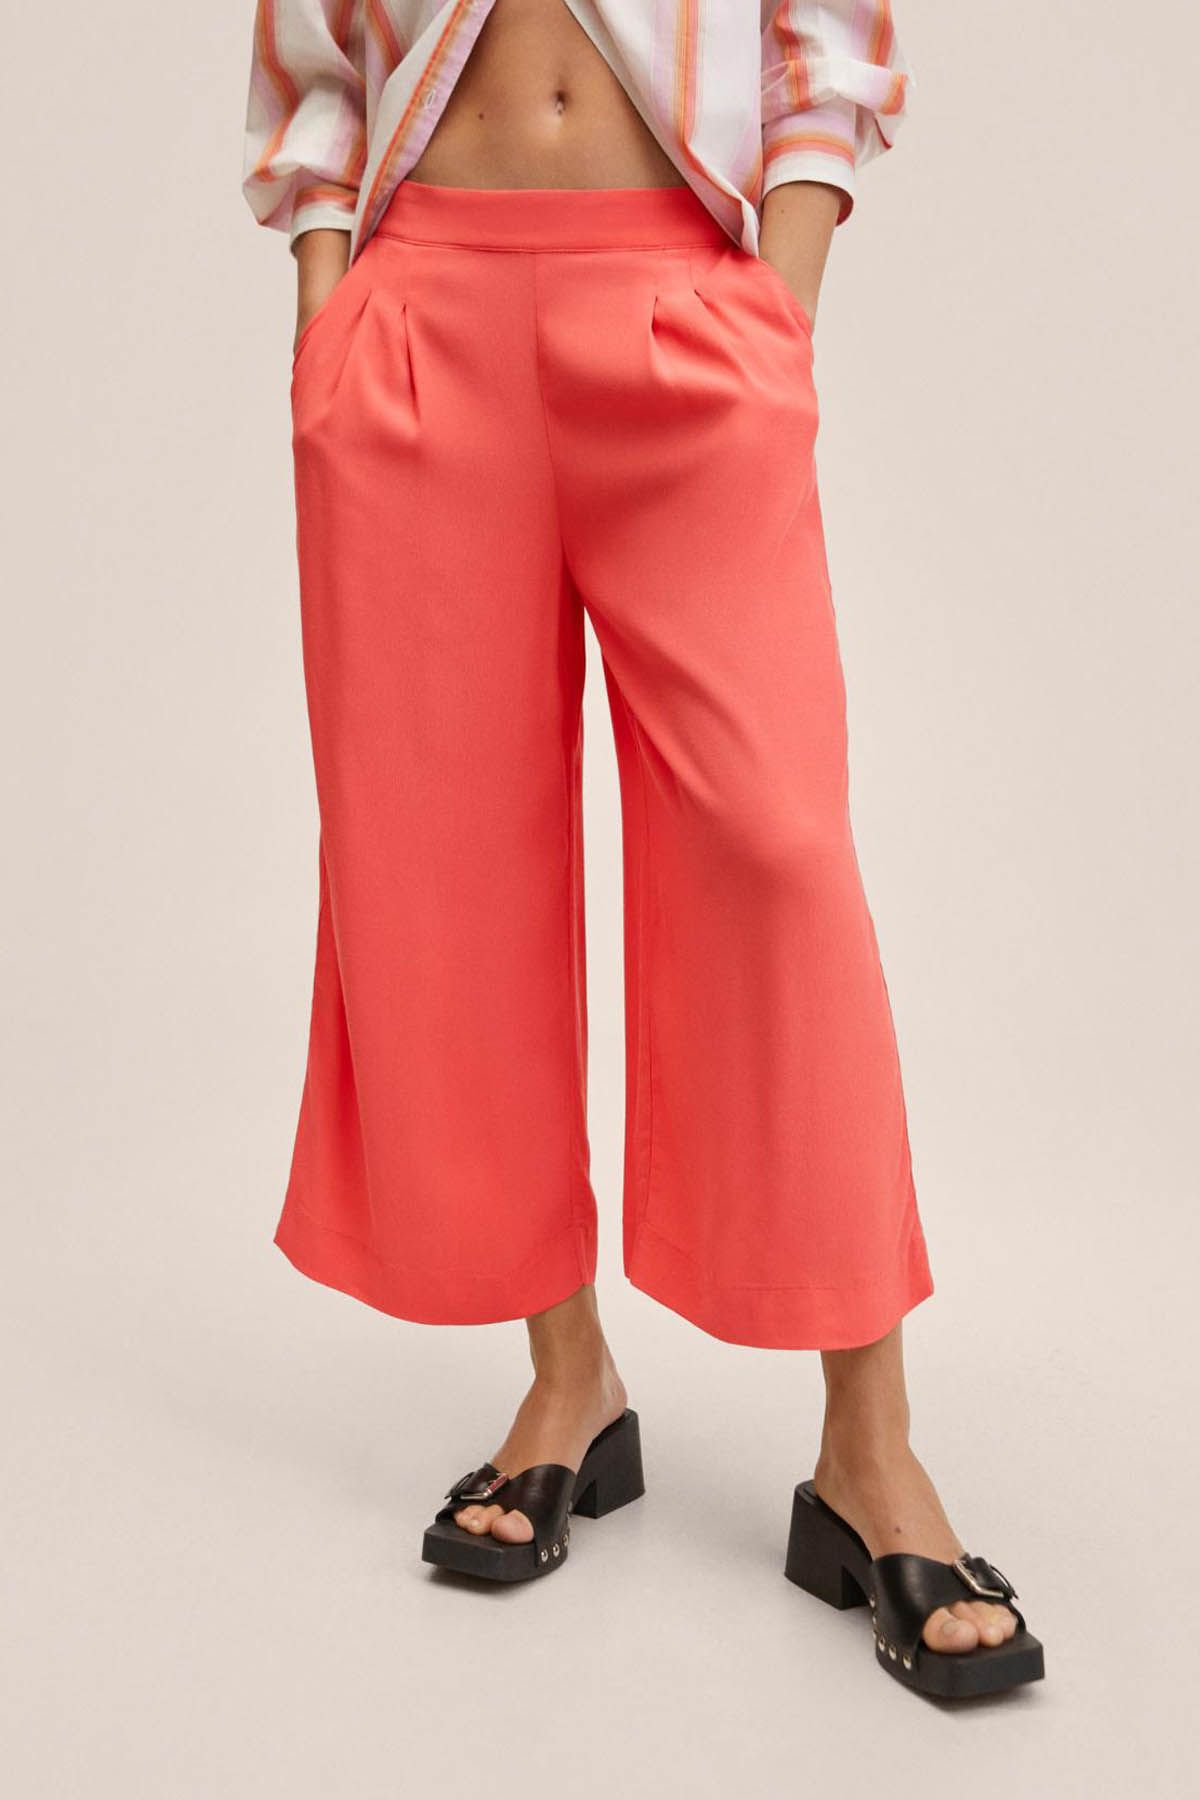 Women's culotte trousers PLR085 - khaki | MODONE wholesale - Clothing For  Men